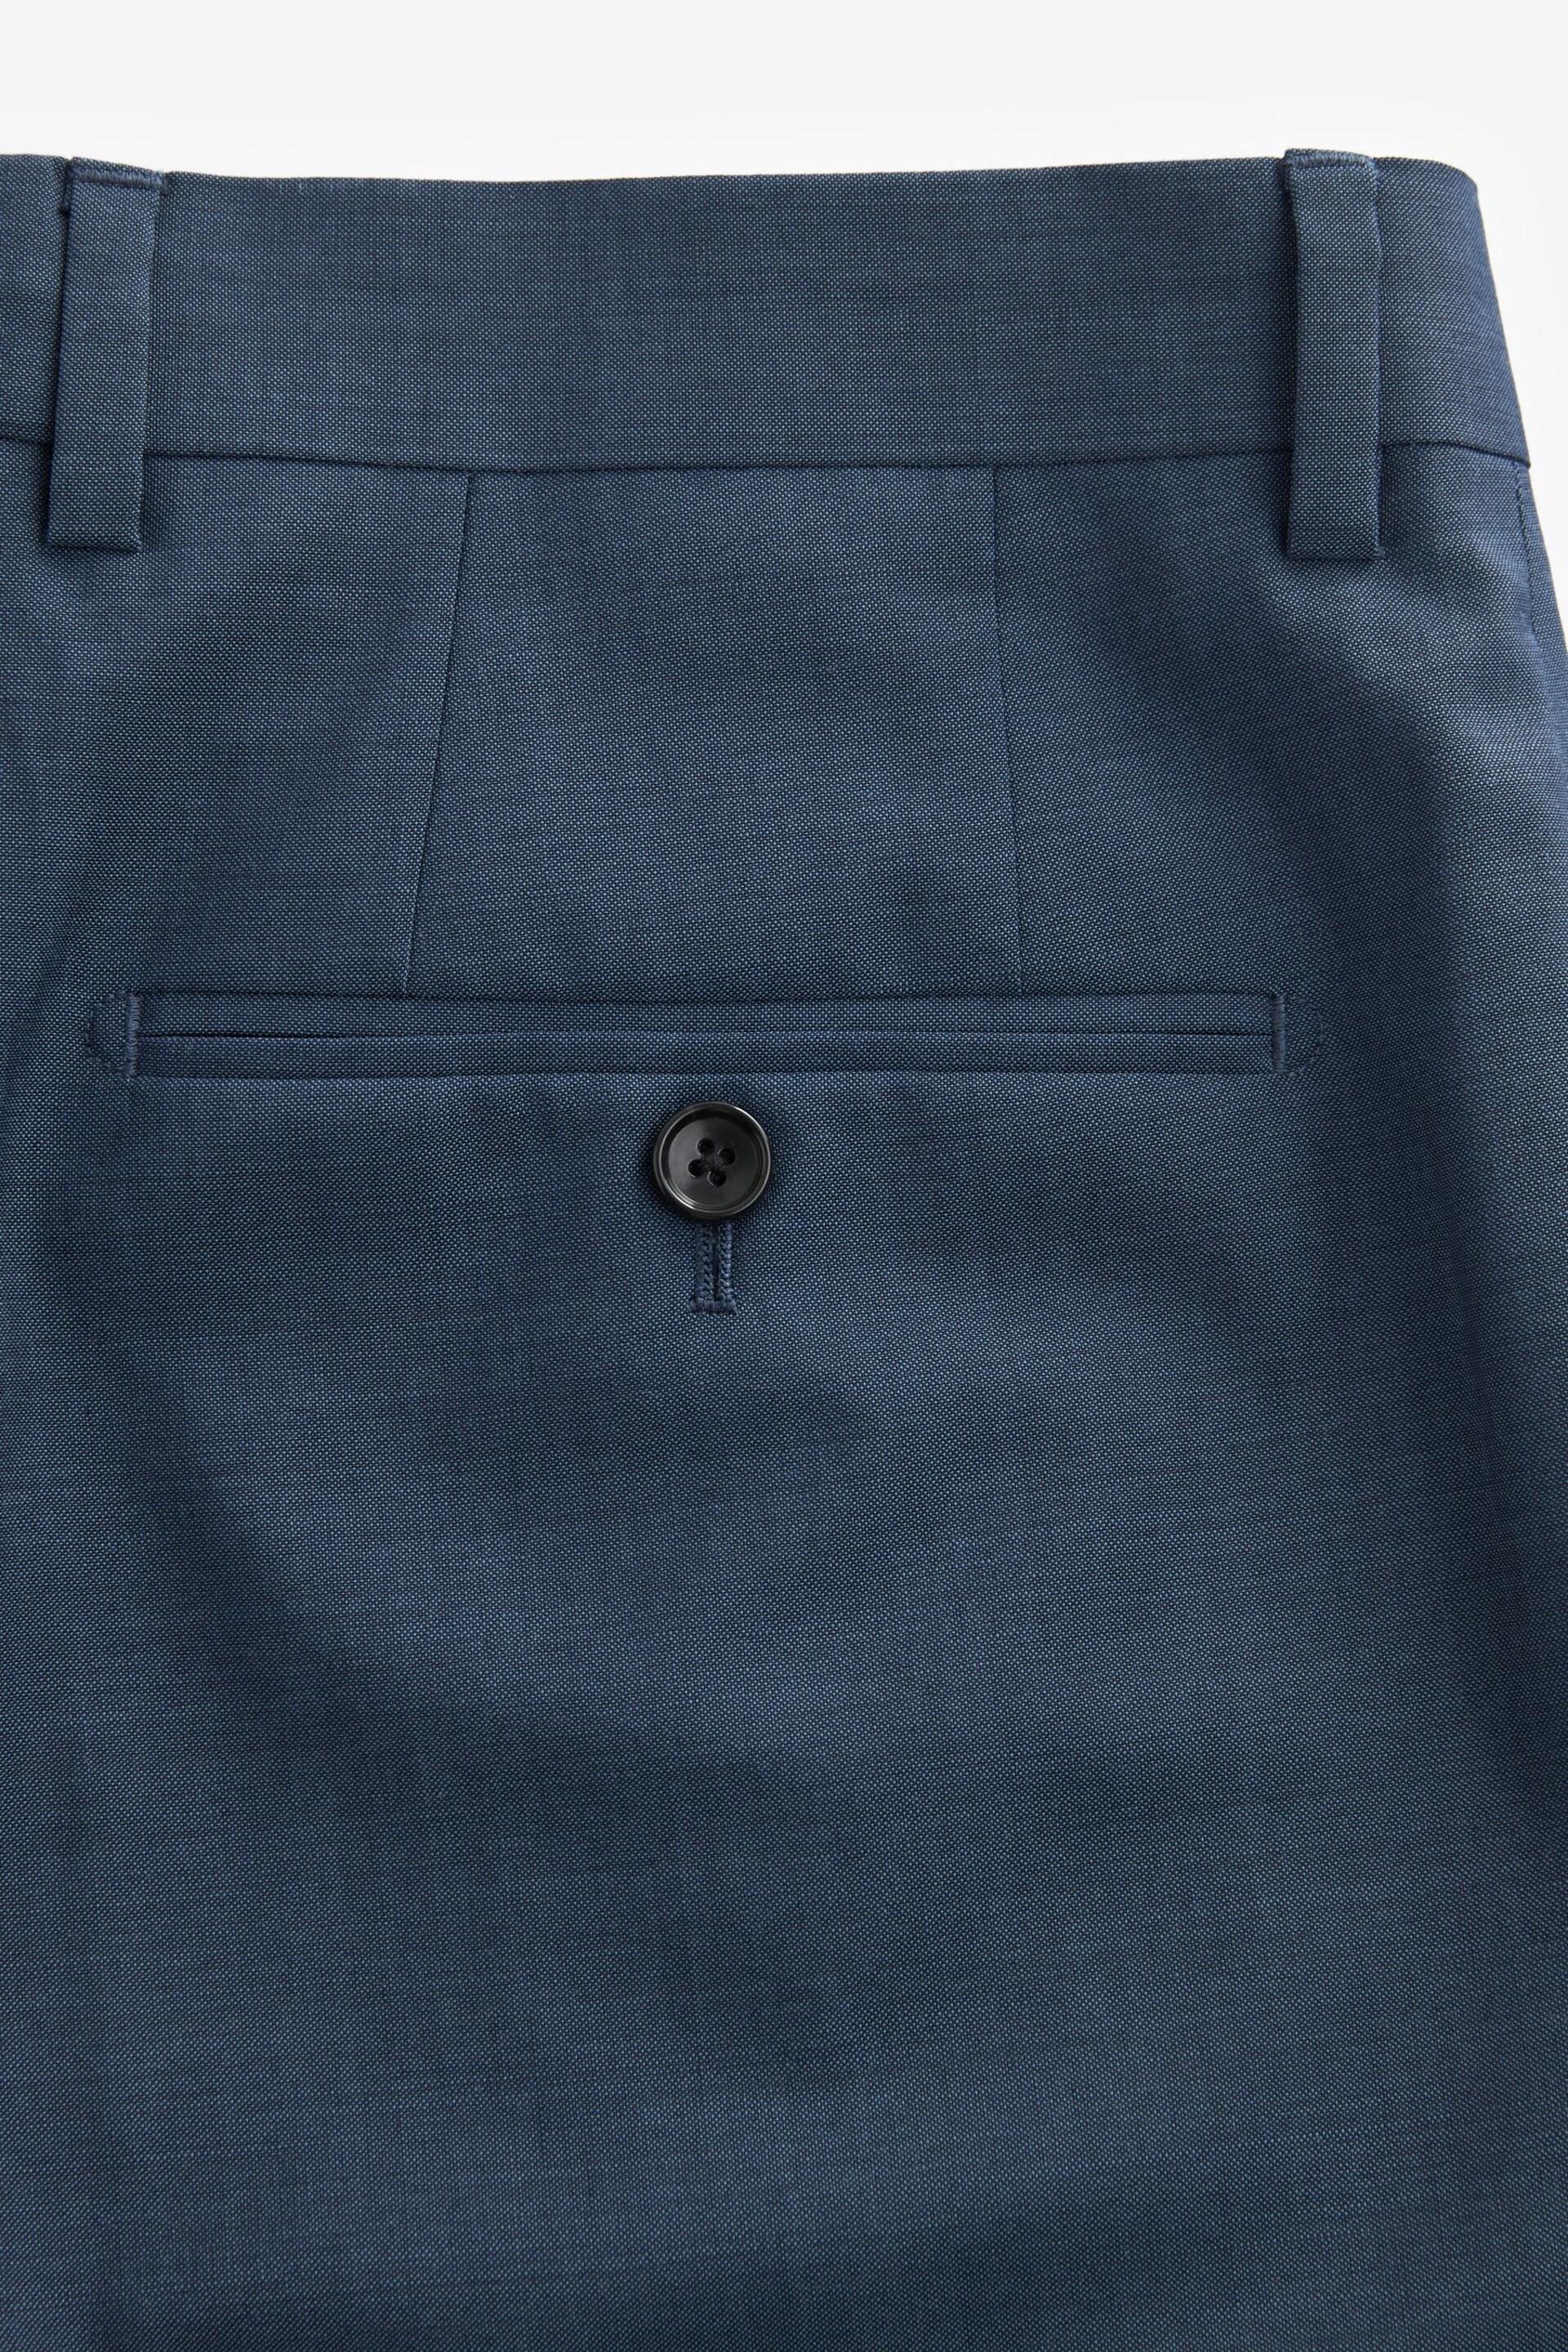 Light Blue Light Blue Slim Fit Signature Tollegno Wool Plain Suit Trousers - Image 3 of 4